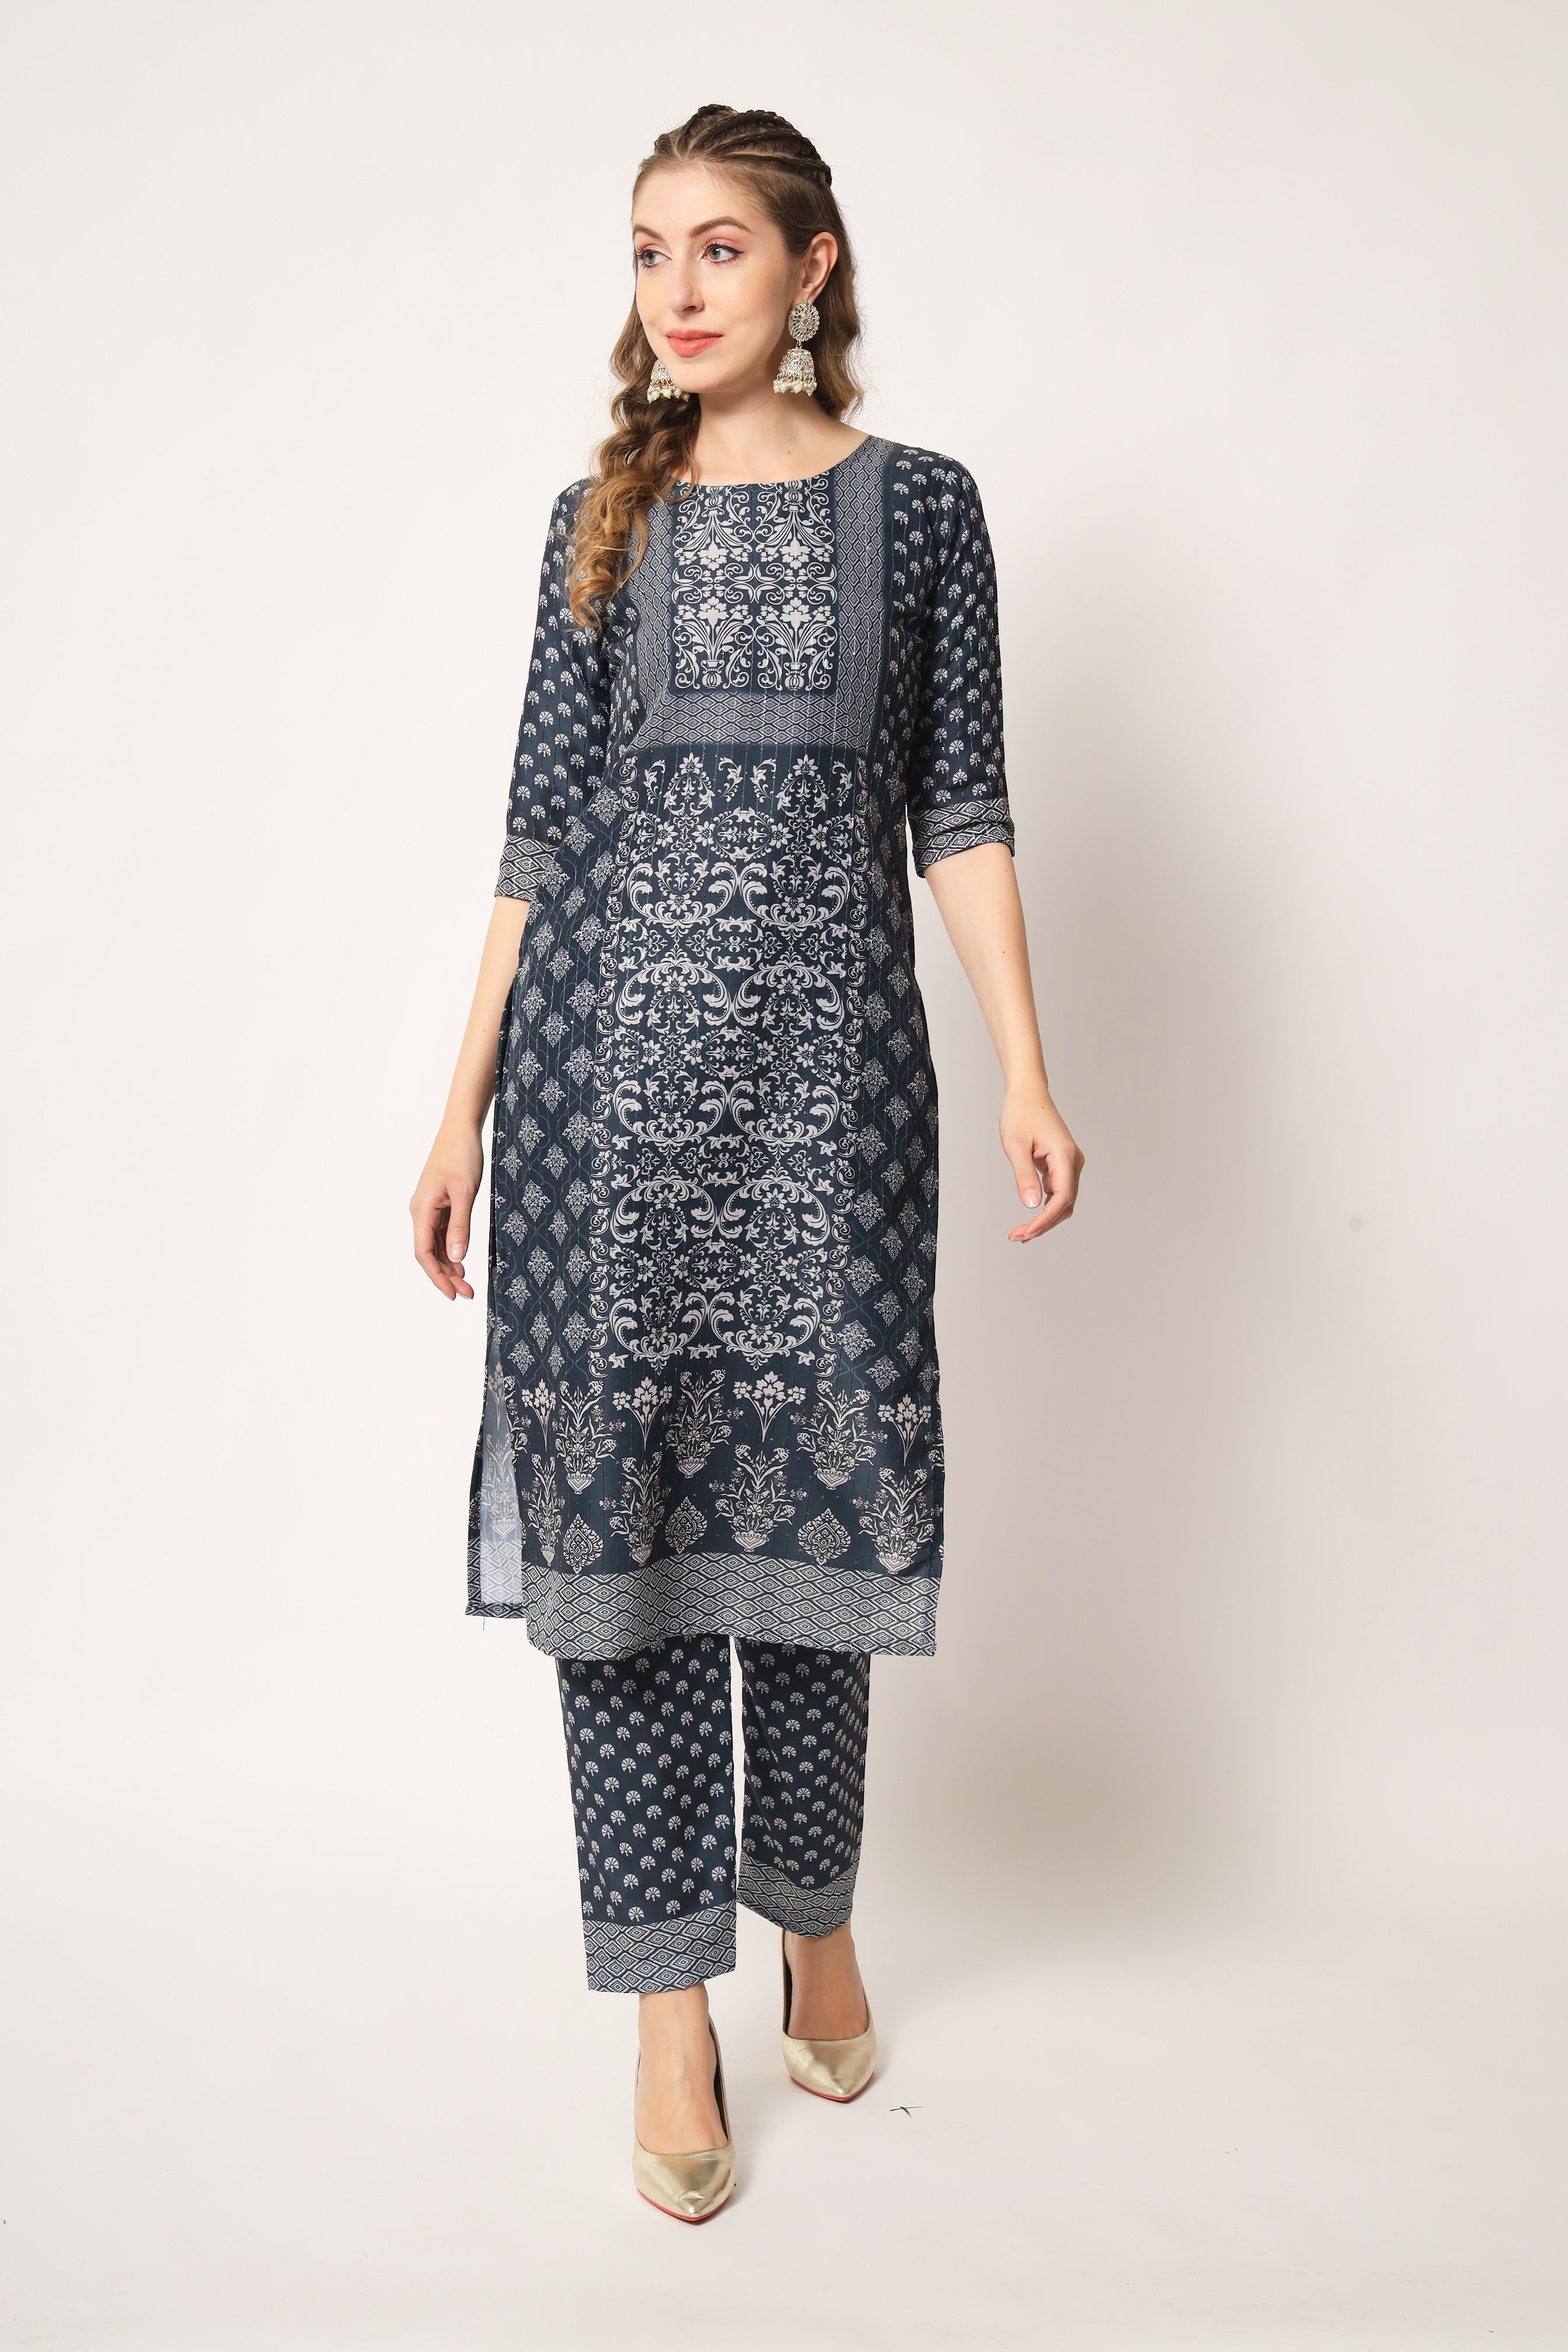 Embroidered Muslin Dark Blue Trendy Salwar Kameez For Women